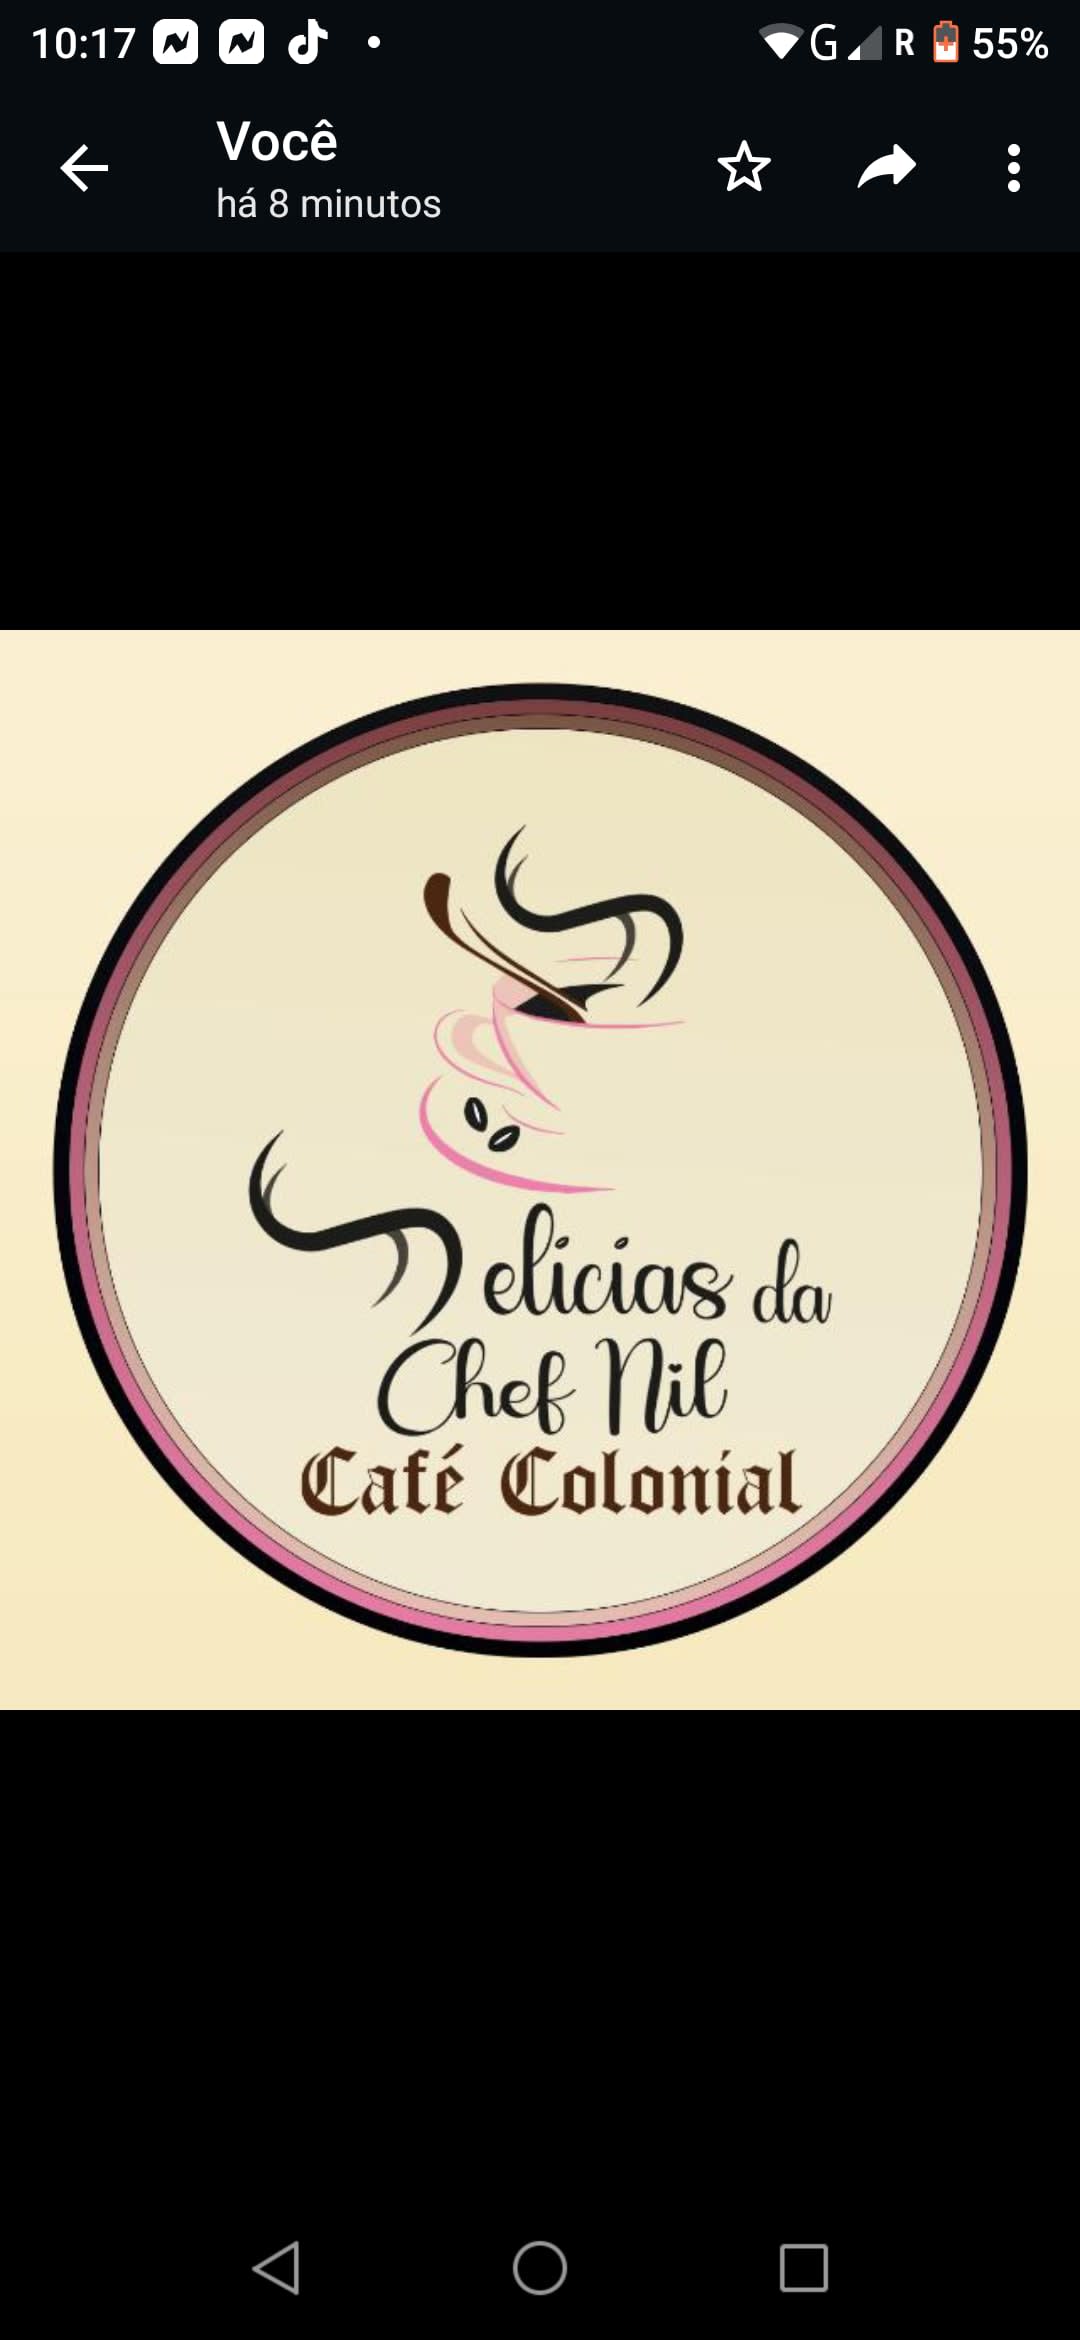 Café Colonial Delícias da Chef Nil